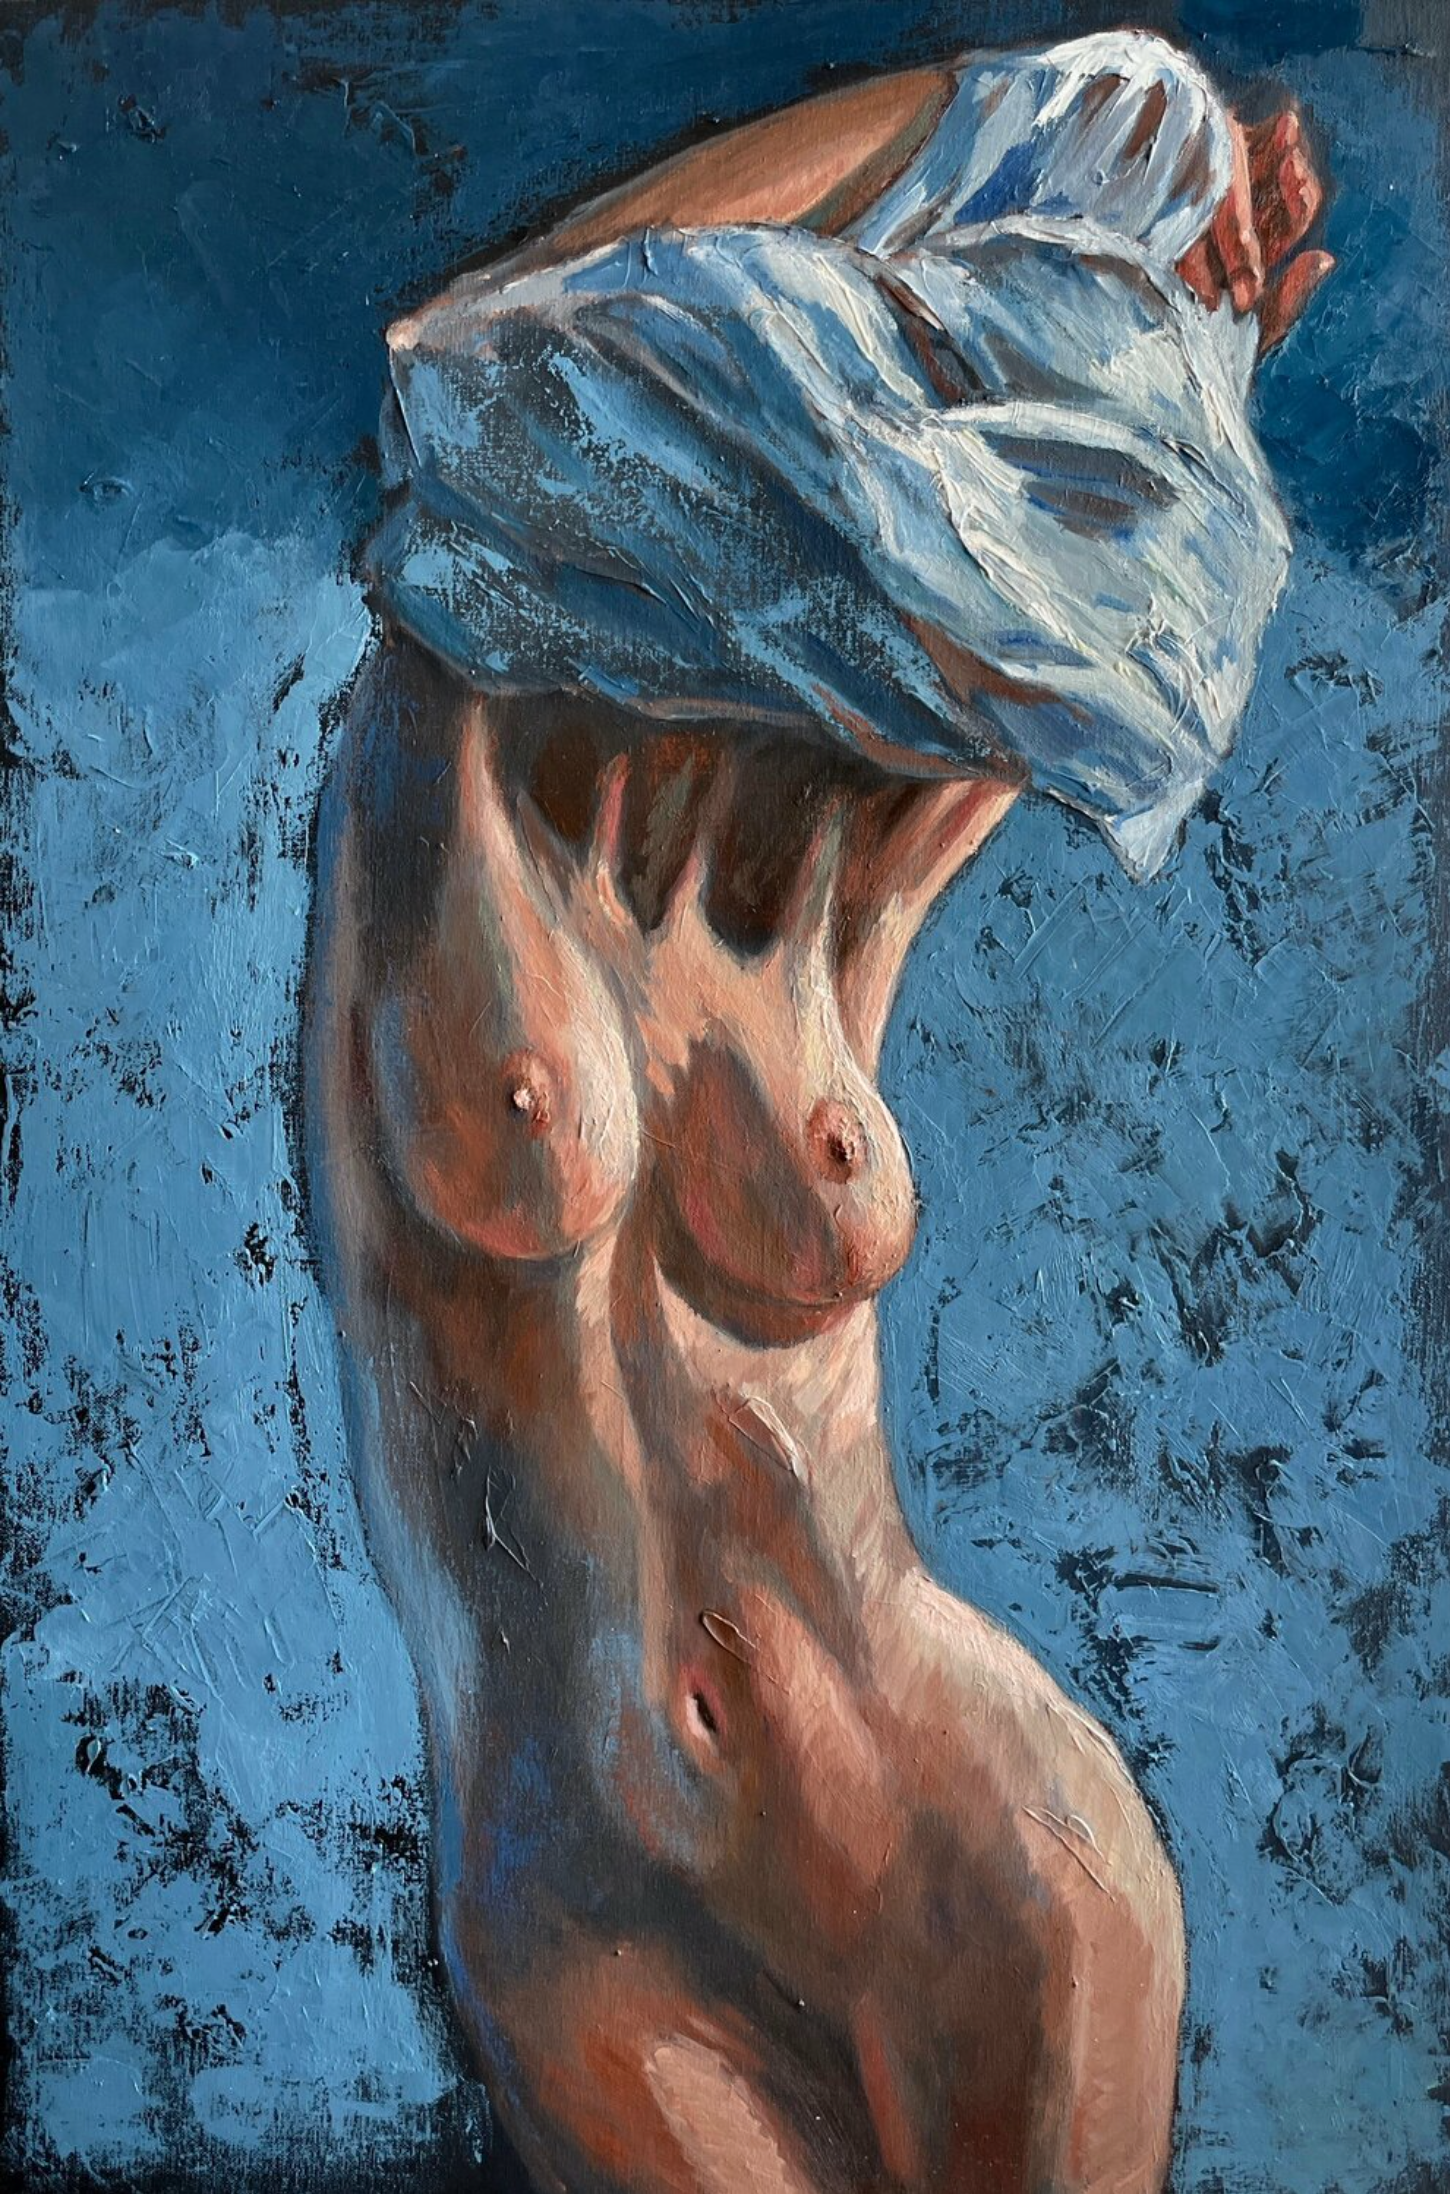 Anna Reznikova的 "脆弱的1 "展示了一幅裸体画。一个漂亮的女人在脱衣服。